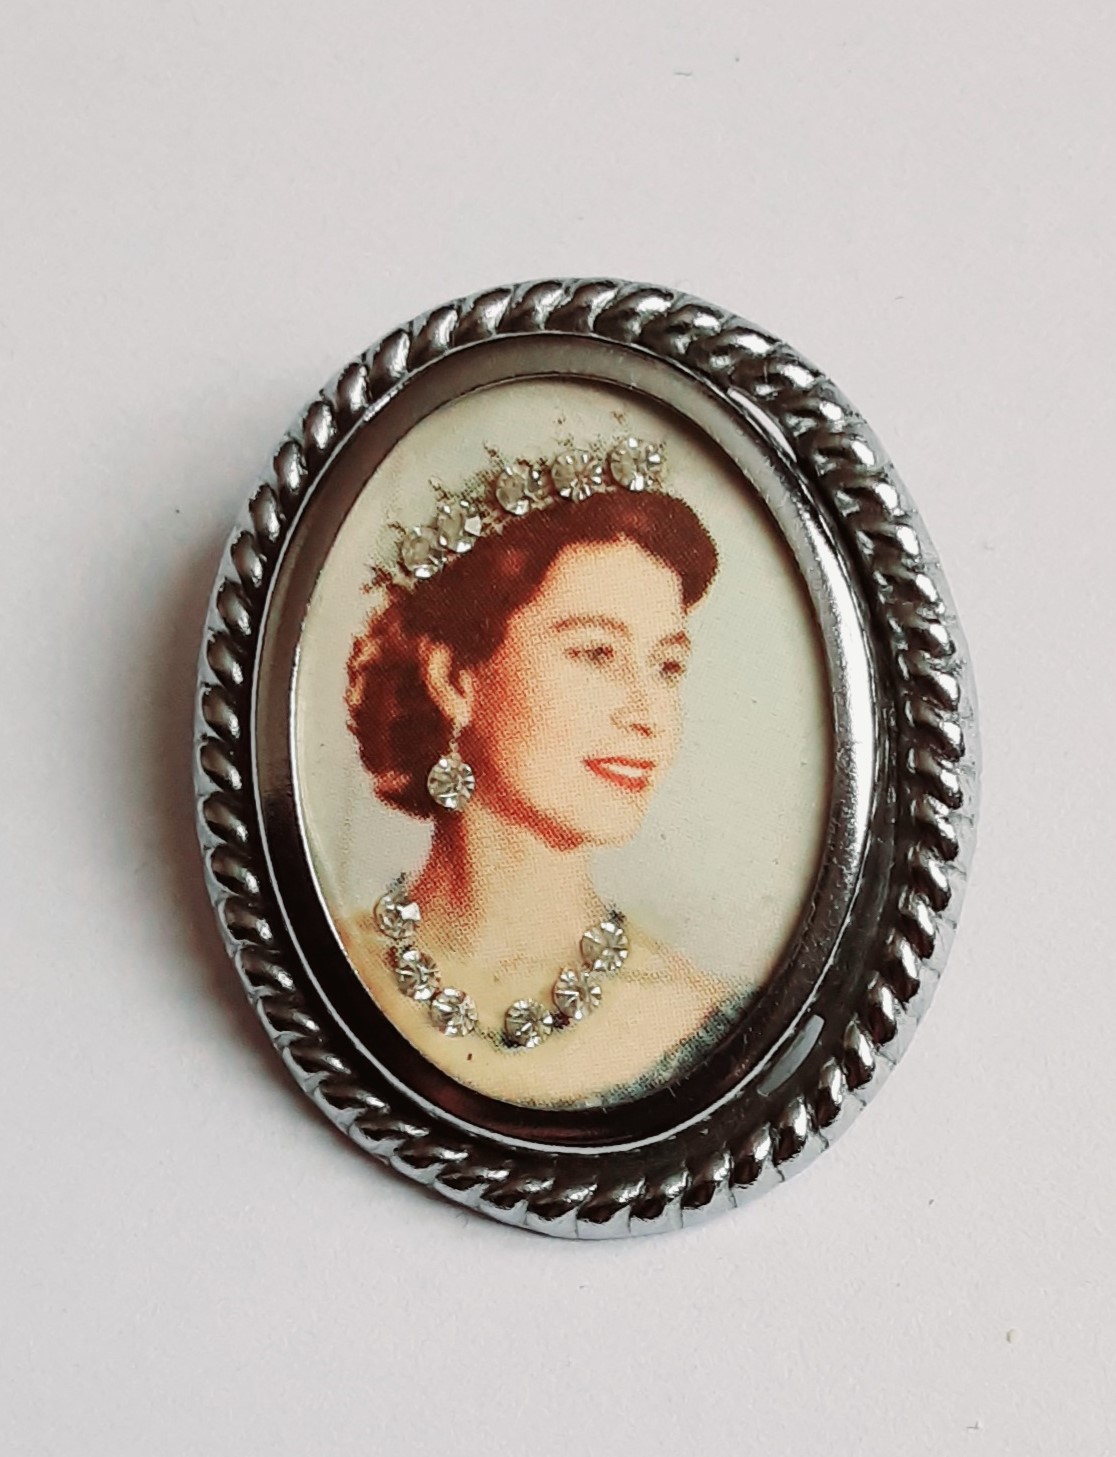 Elizbeth 11 coronation brooch